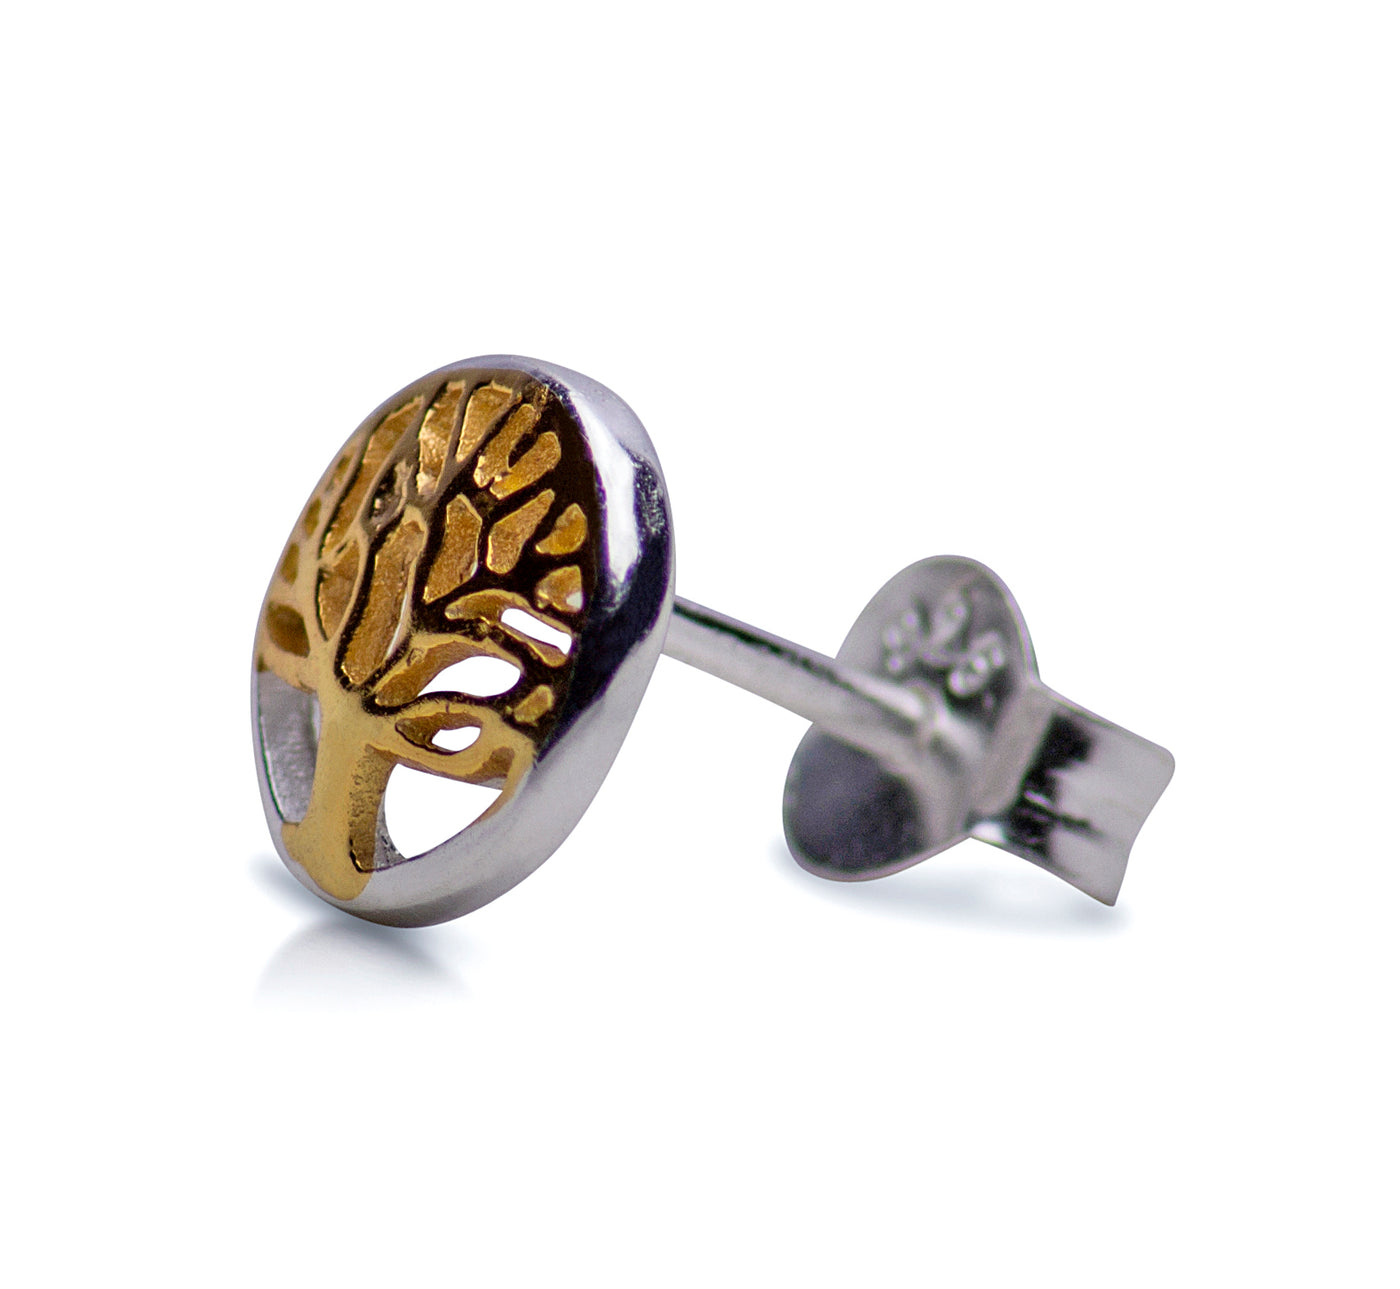 14K Gold Plated Tree of Life Earrings | SilverAndGold